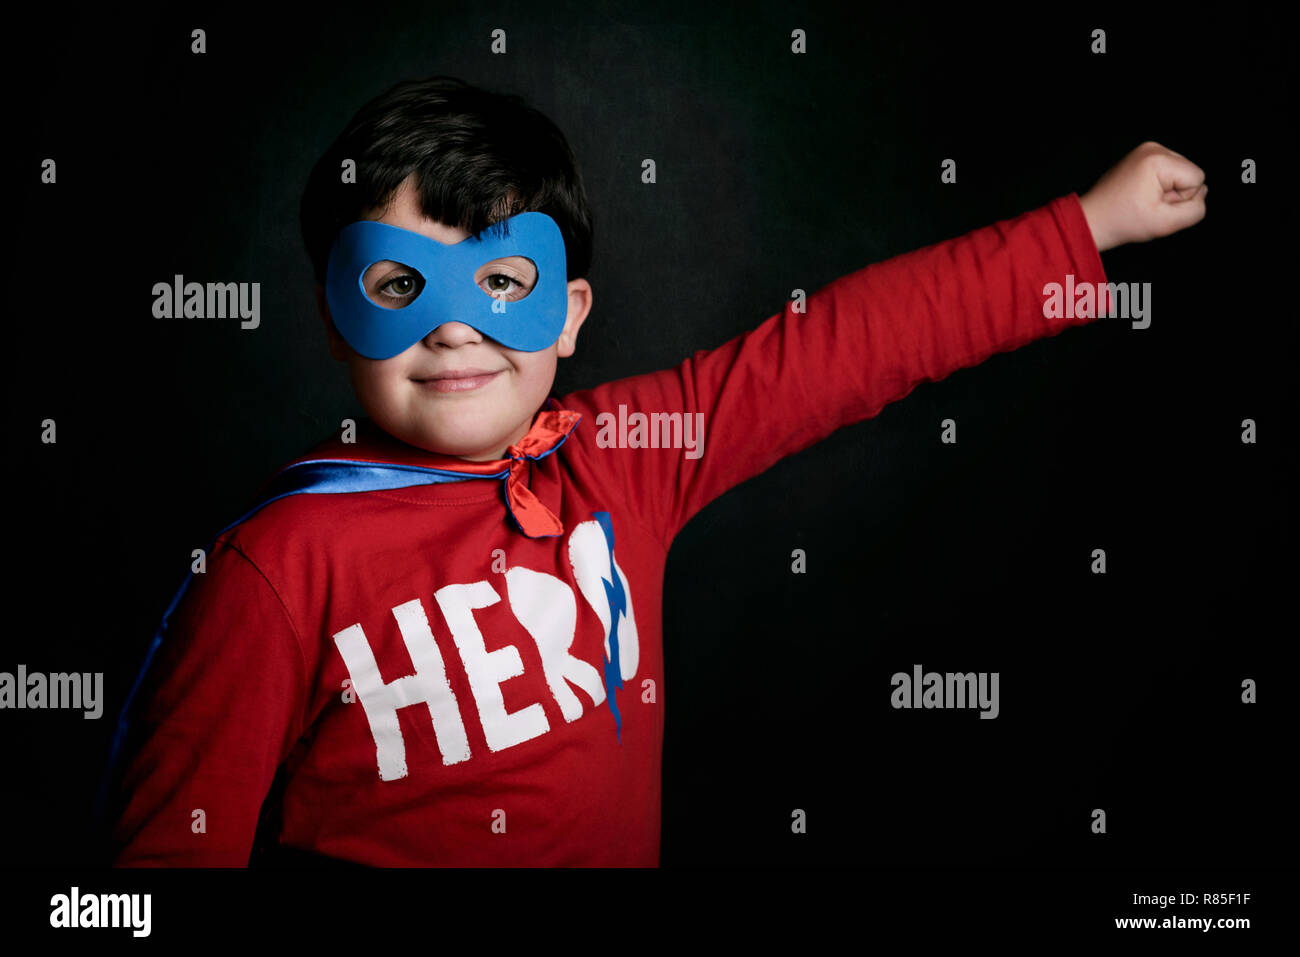 Portrait of boy in superhero costume on black background Stock Photo